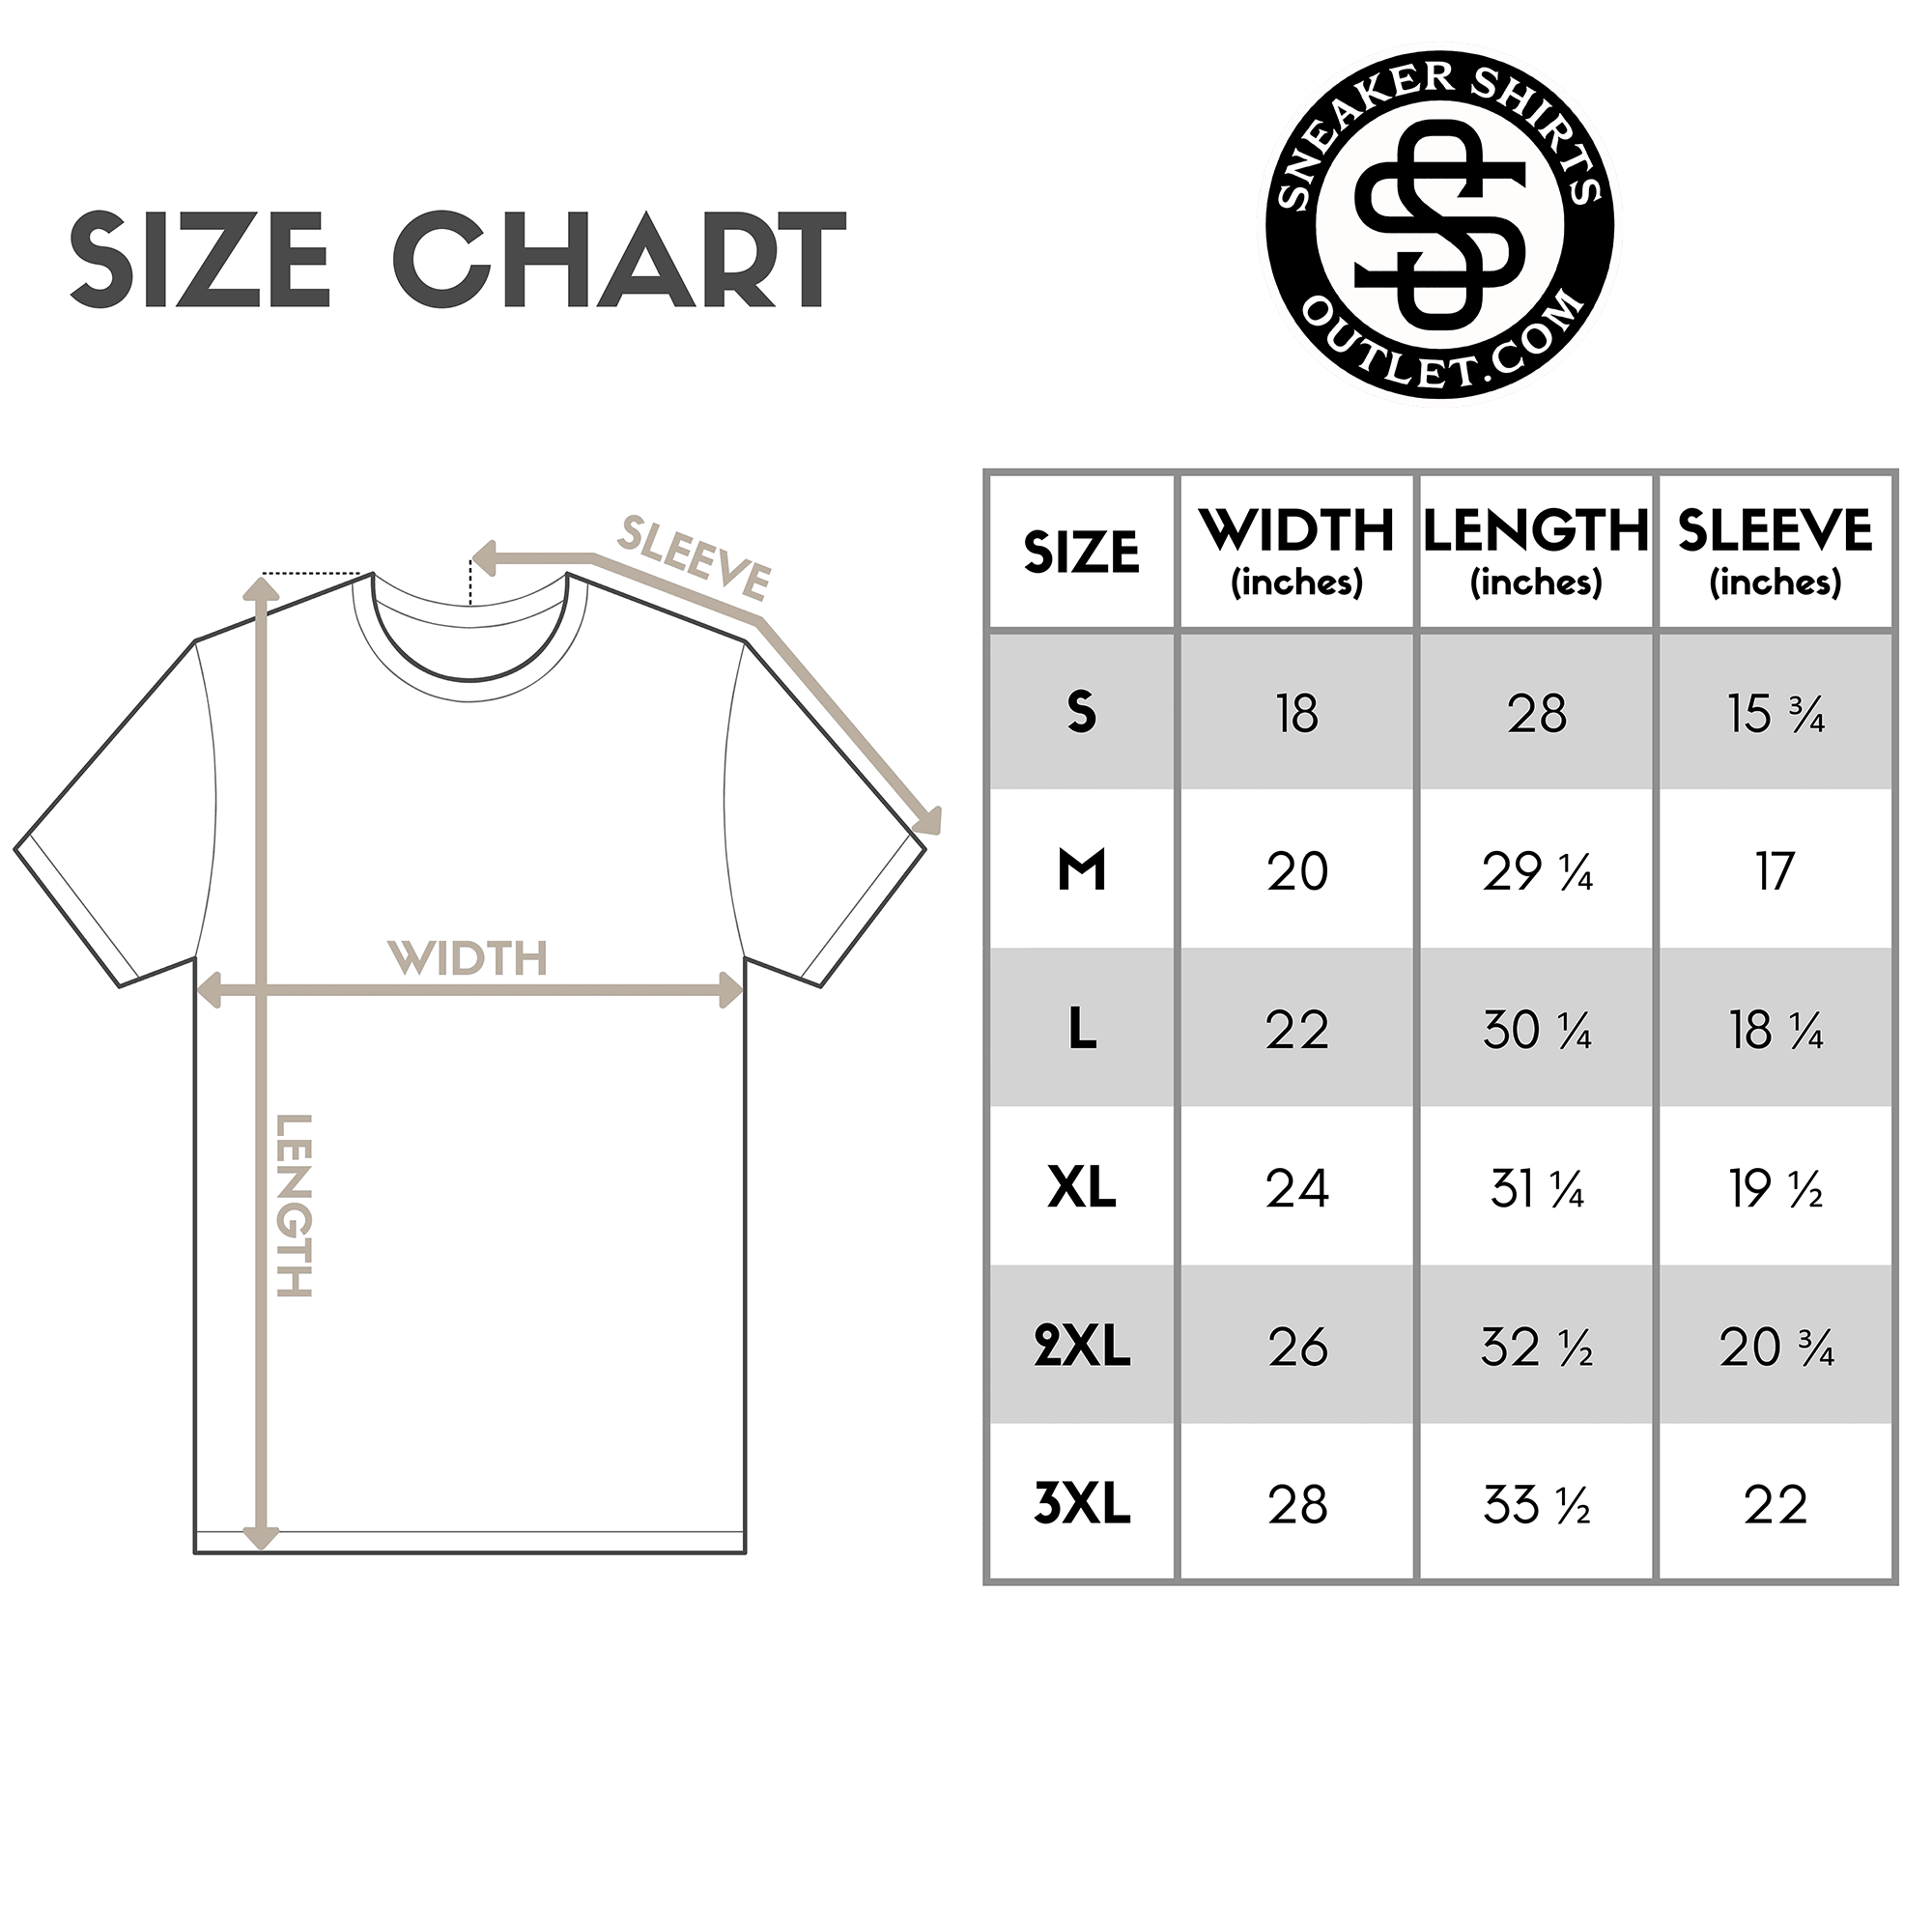 Never Bend Break or Fold Shirt size chart photo